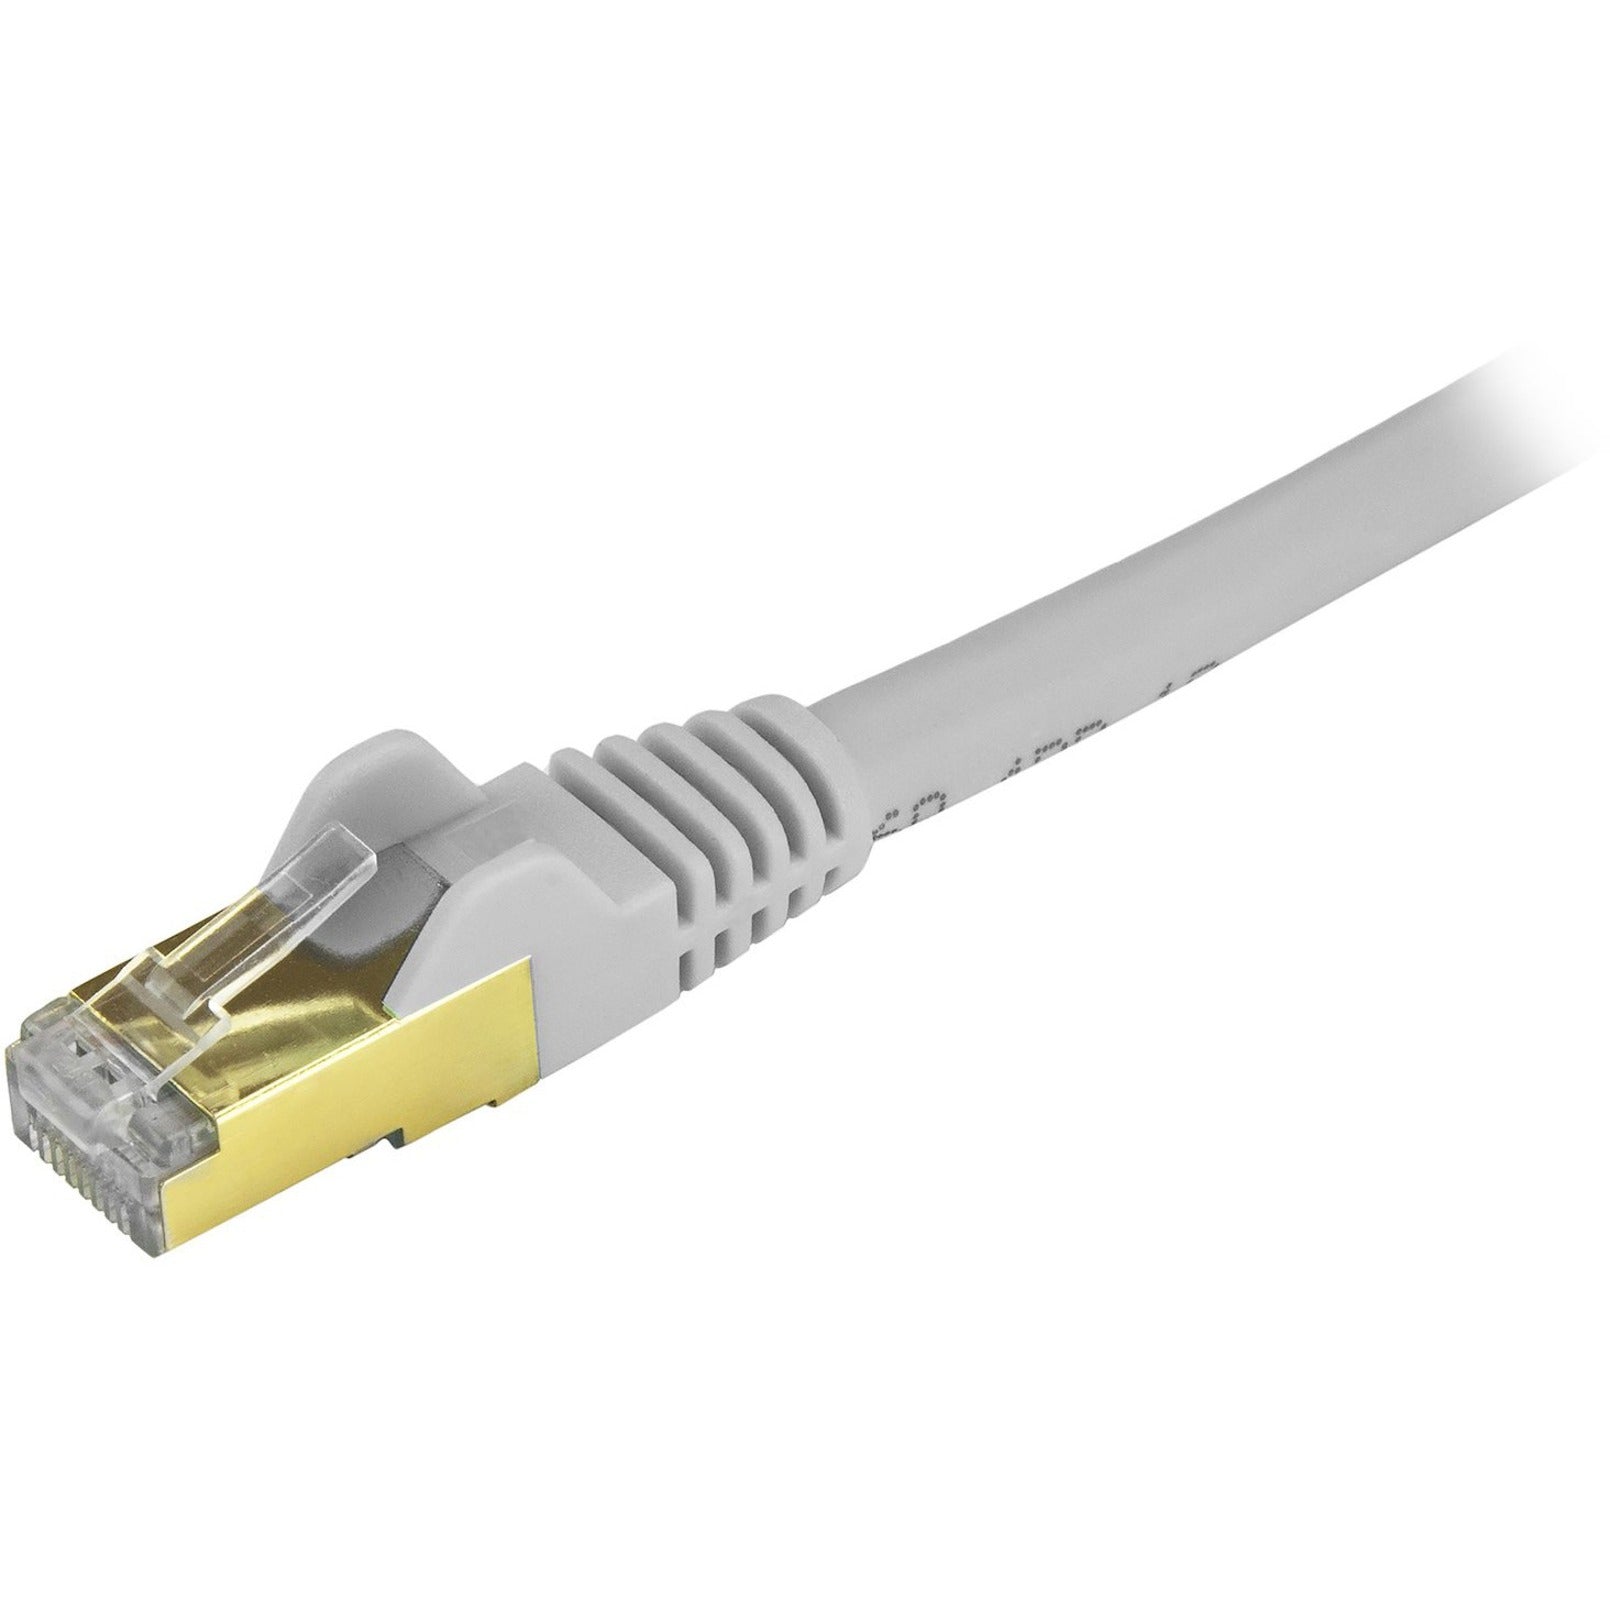 StarTech.com C6ASPAT8GR Cat6a Ethernet Patch Cable - Shielded (STP) - 8 ft., Gray, Snagless RJ45 Ethernet Cord